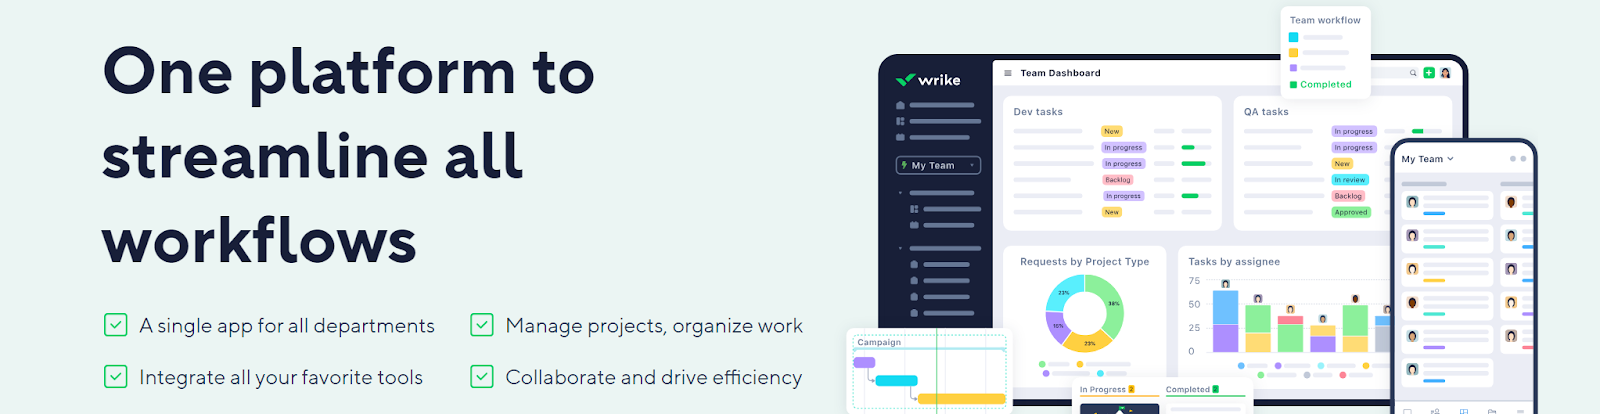 Image showing Wrike as a workflow management platform